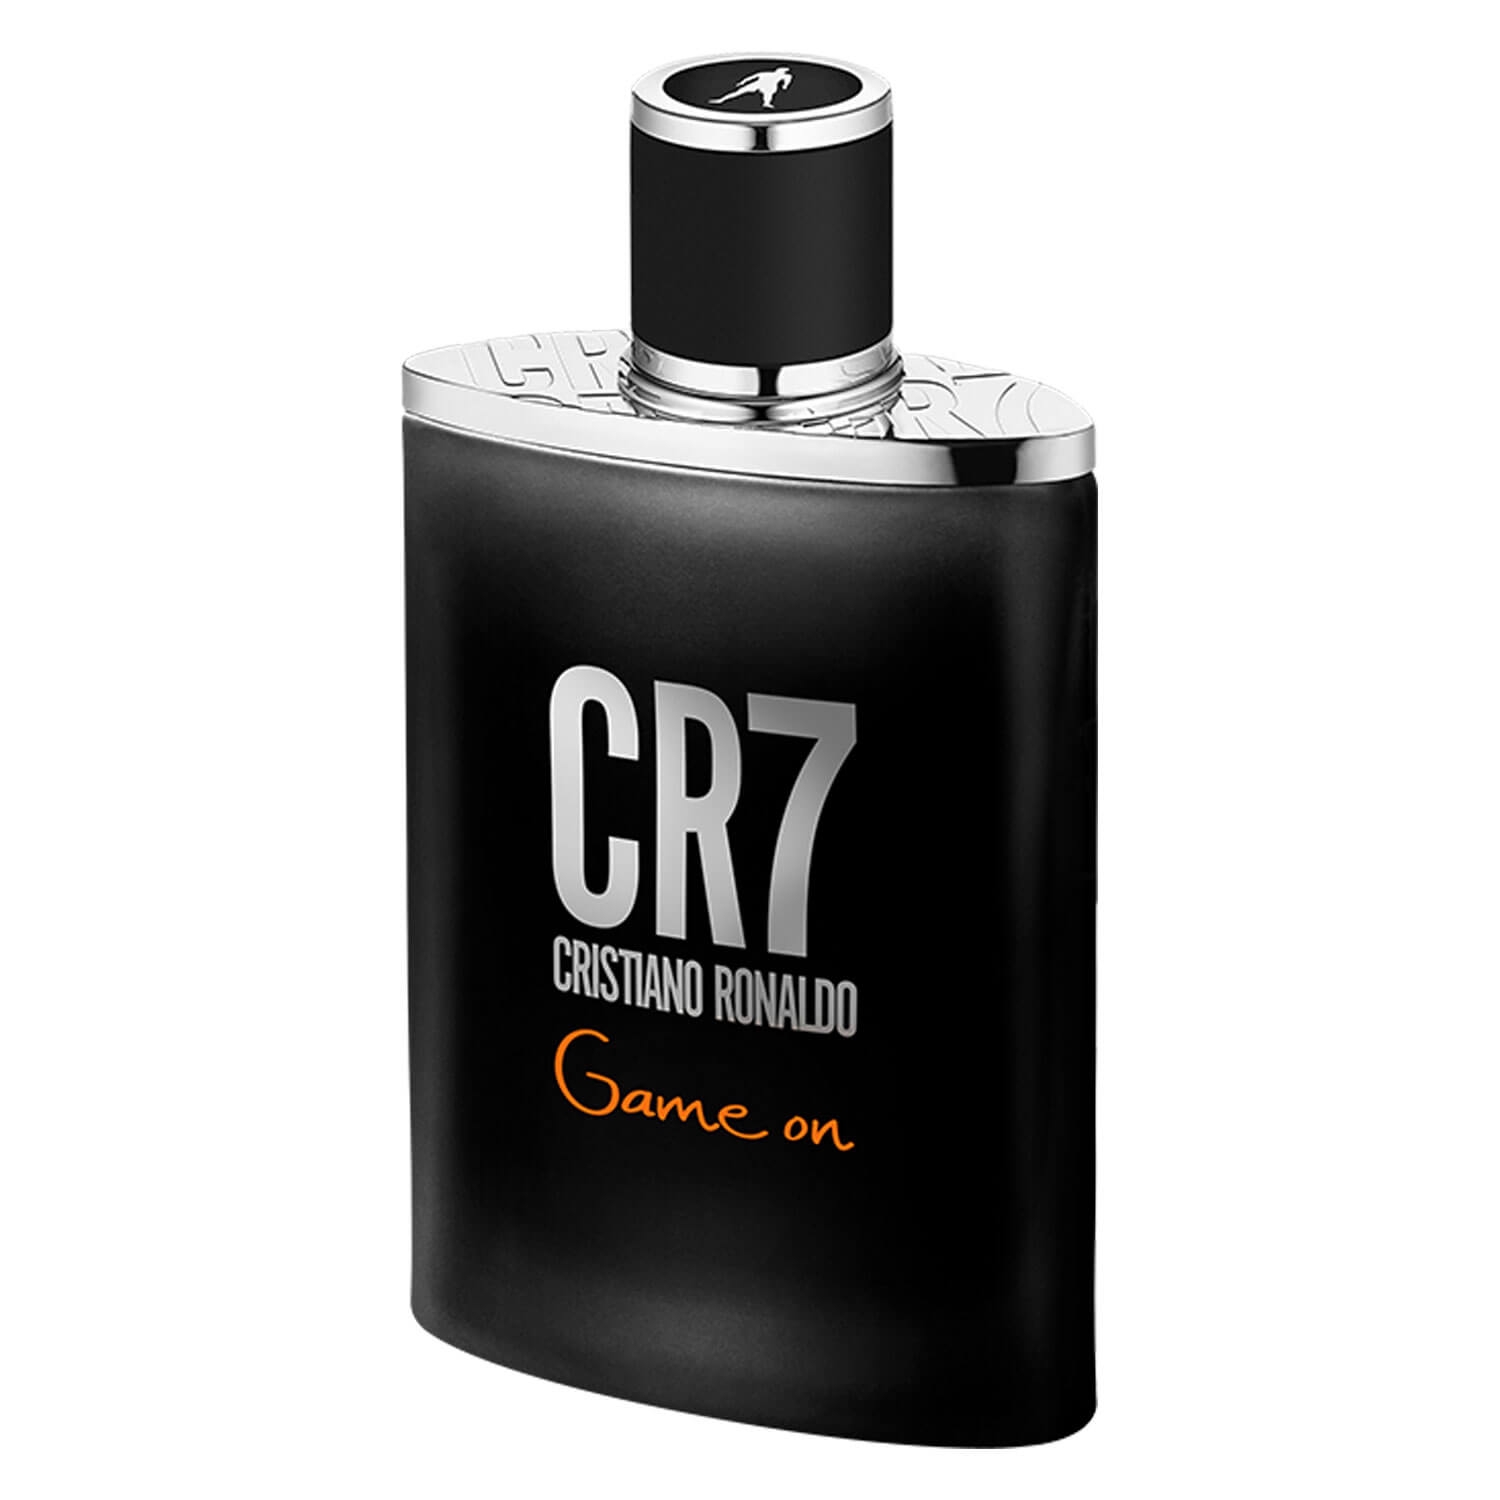 Produktbild von CR7 Cristiano Ronaldo - Game On Eau de Toilette